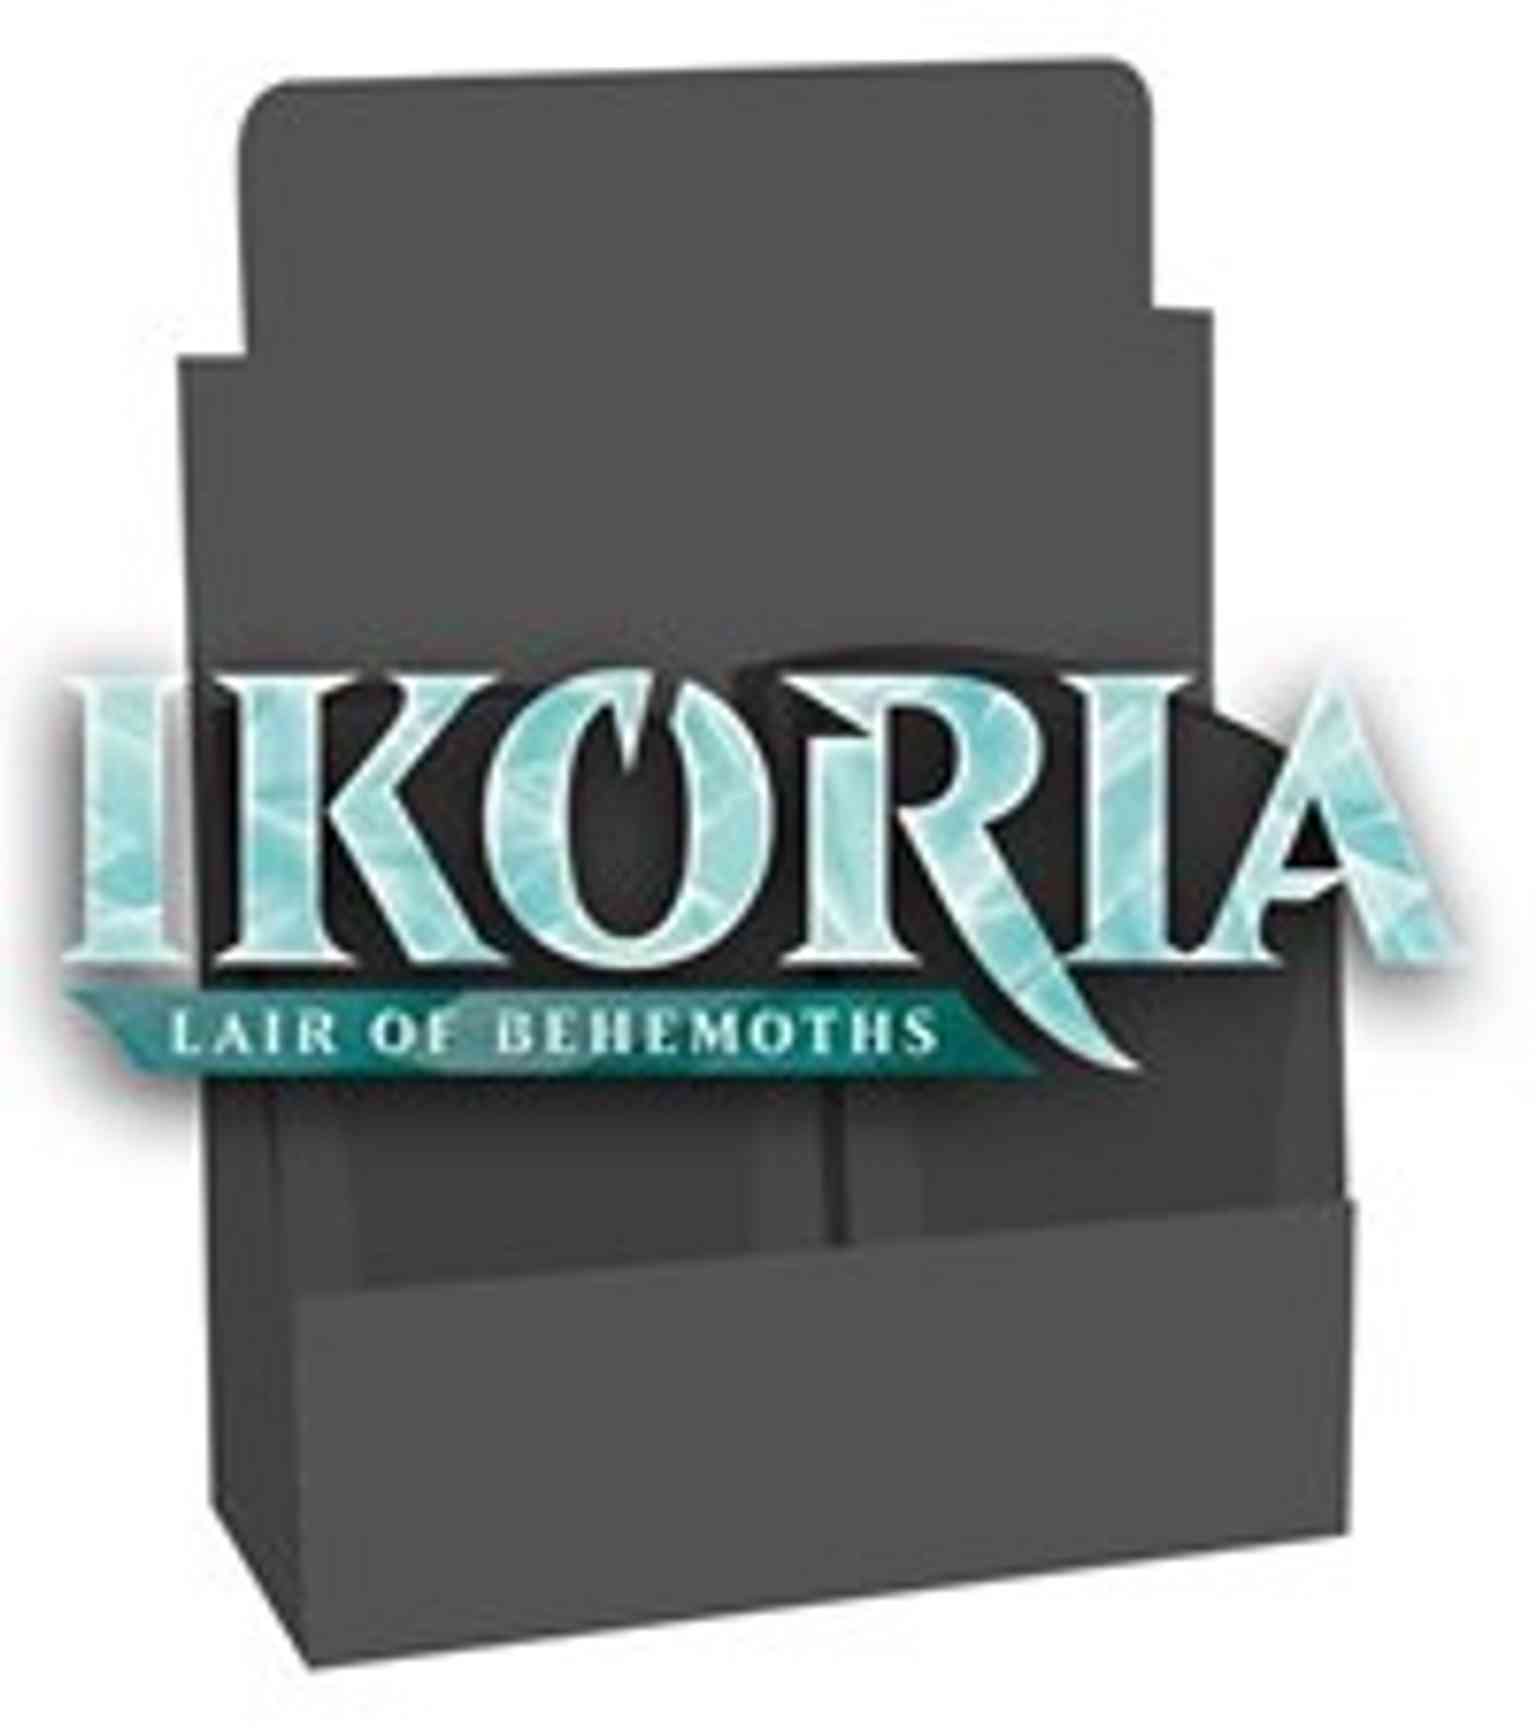 Ikoria: Lair of Behemoths - Theme Booster Display Box magic card front